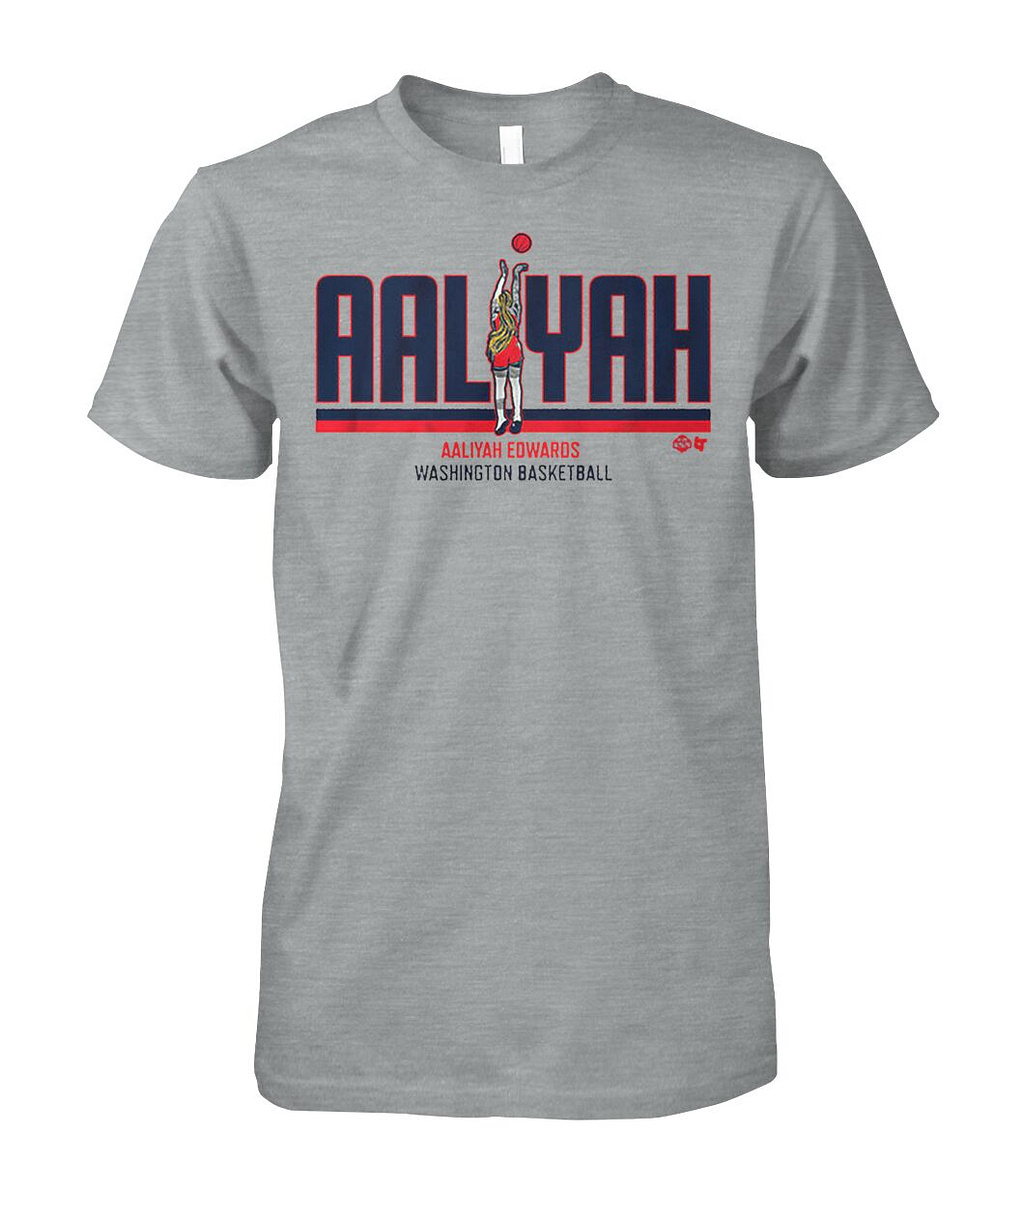 Aaliyah Edwards Washington Shirt by aipsdesign on Dribbble